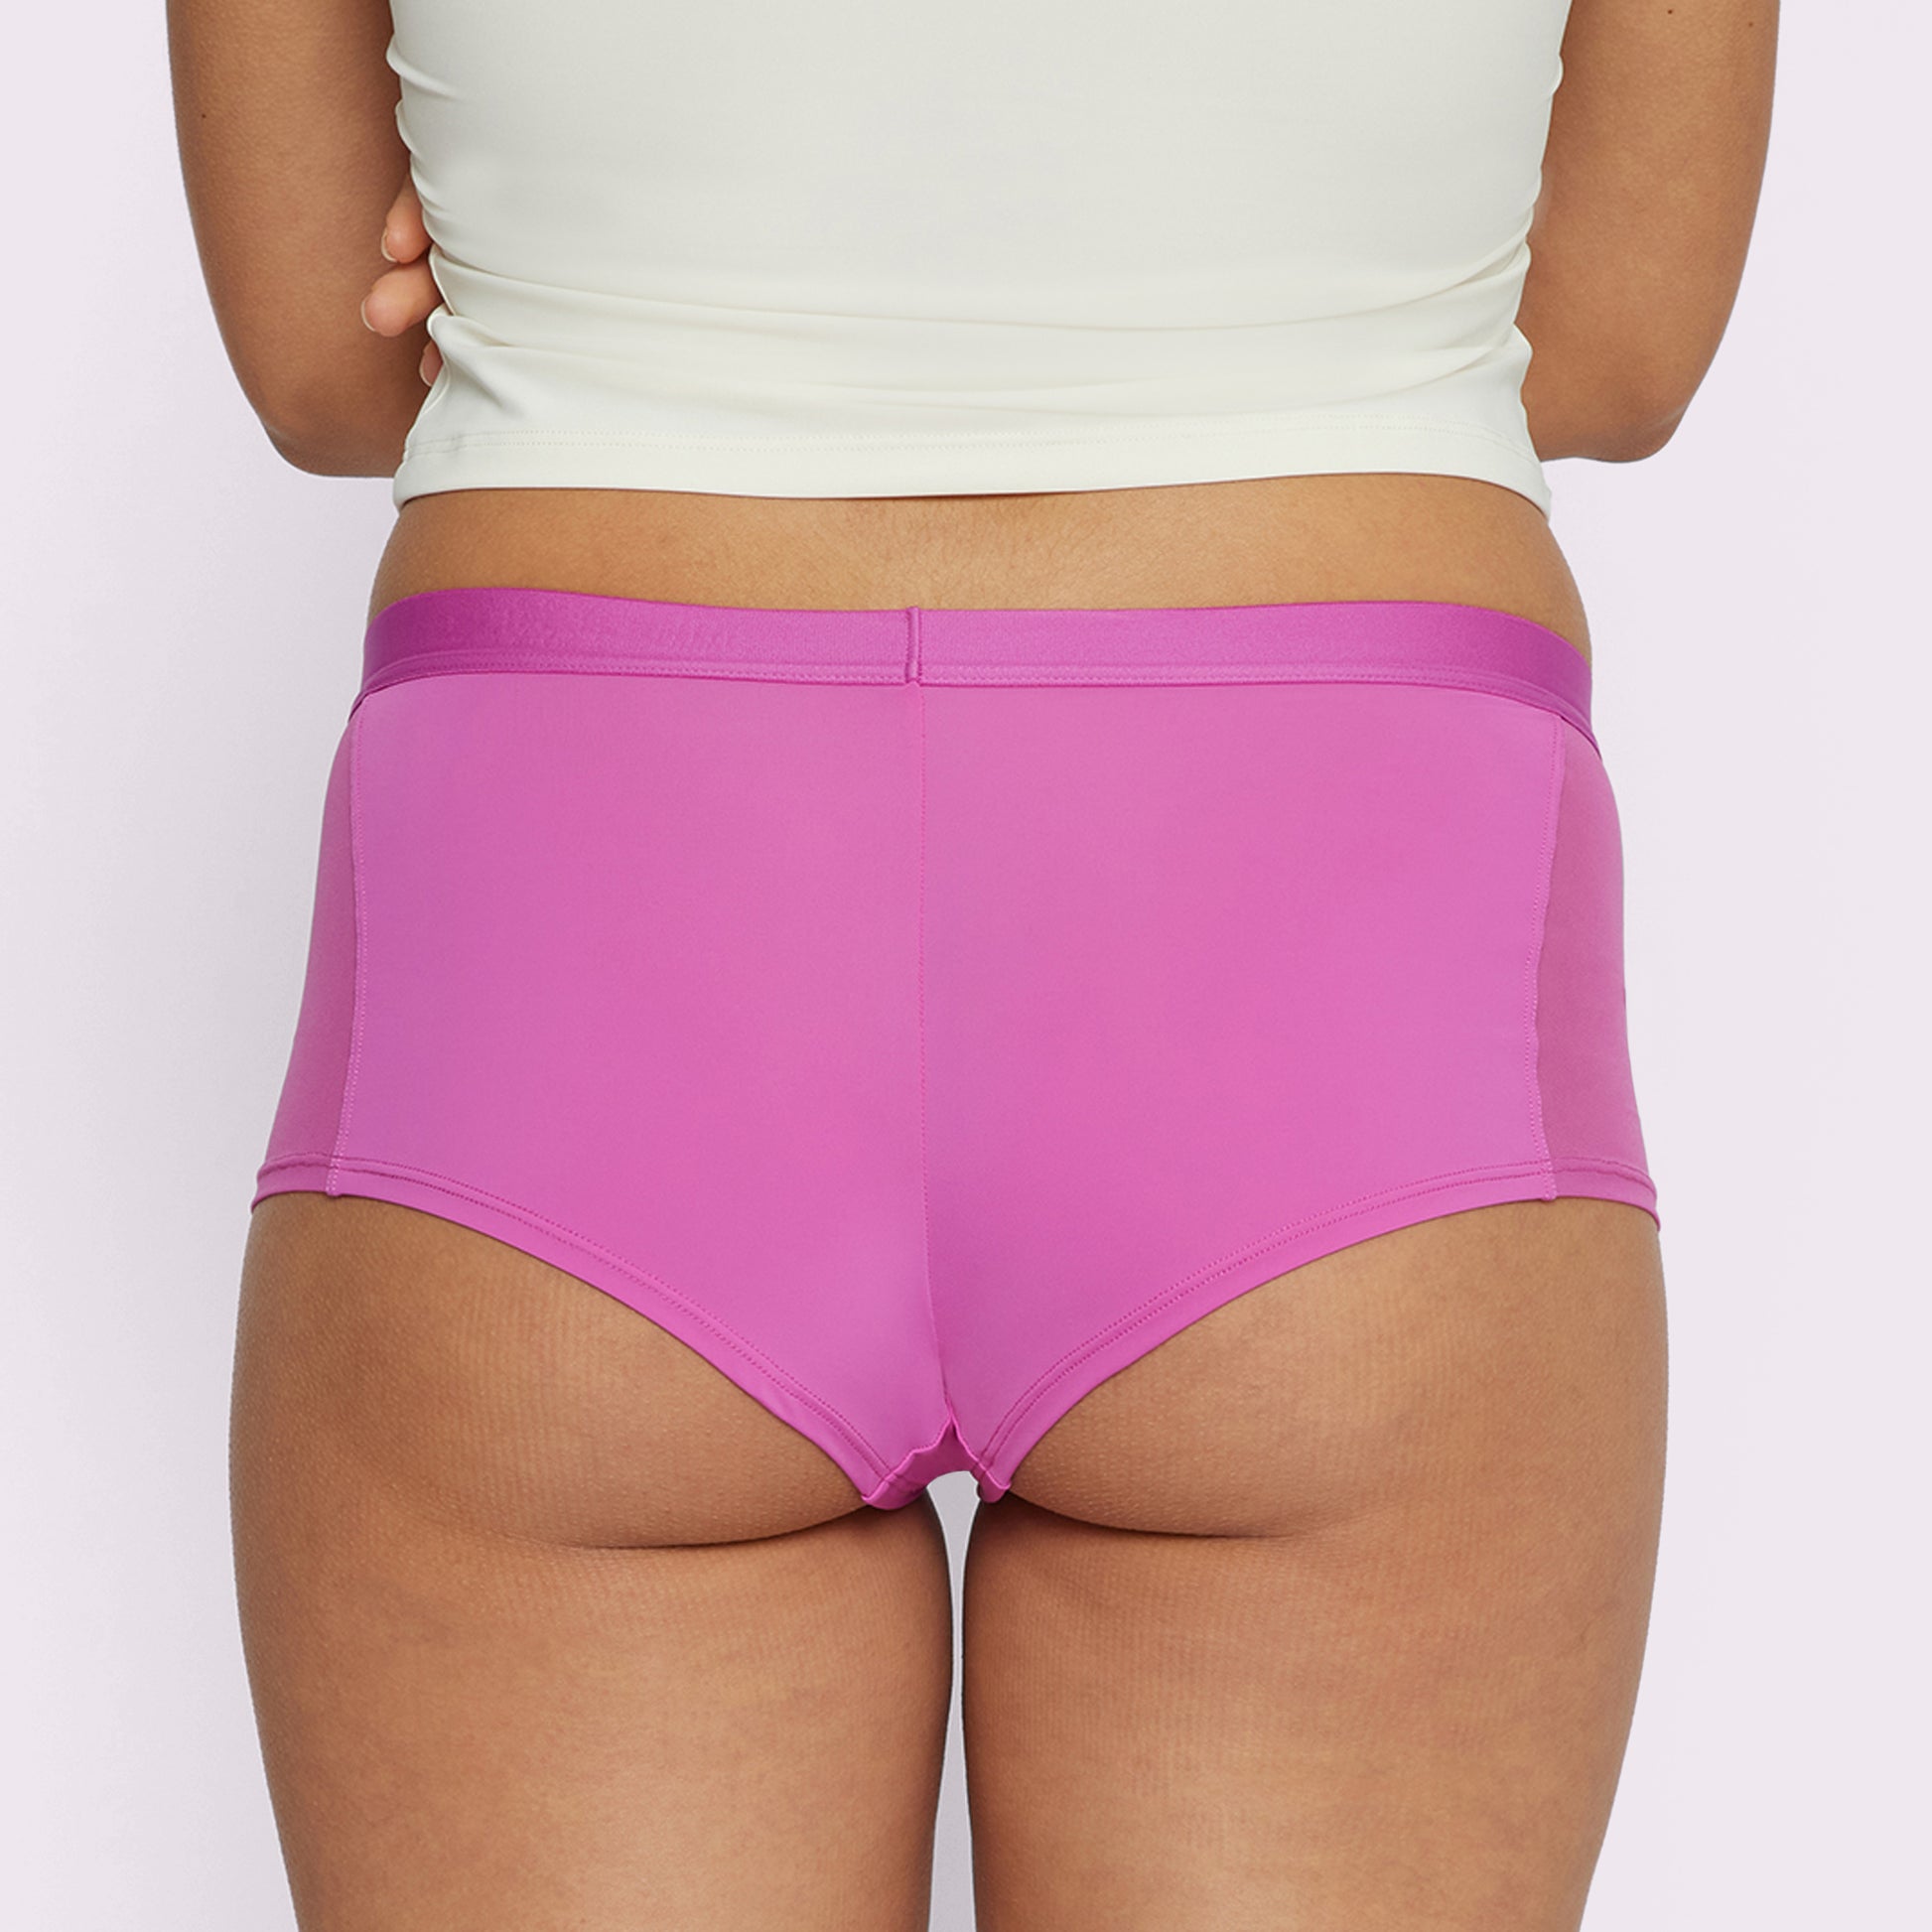 Boyshort, Women's Underwear, Starting at $9